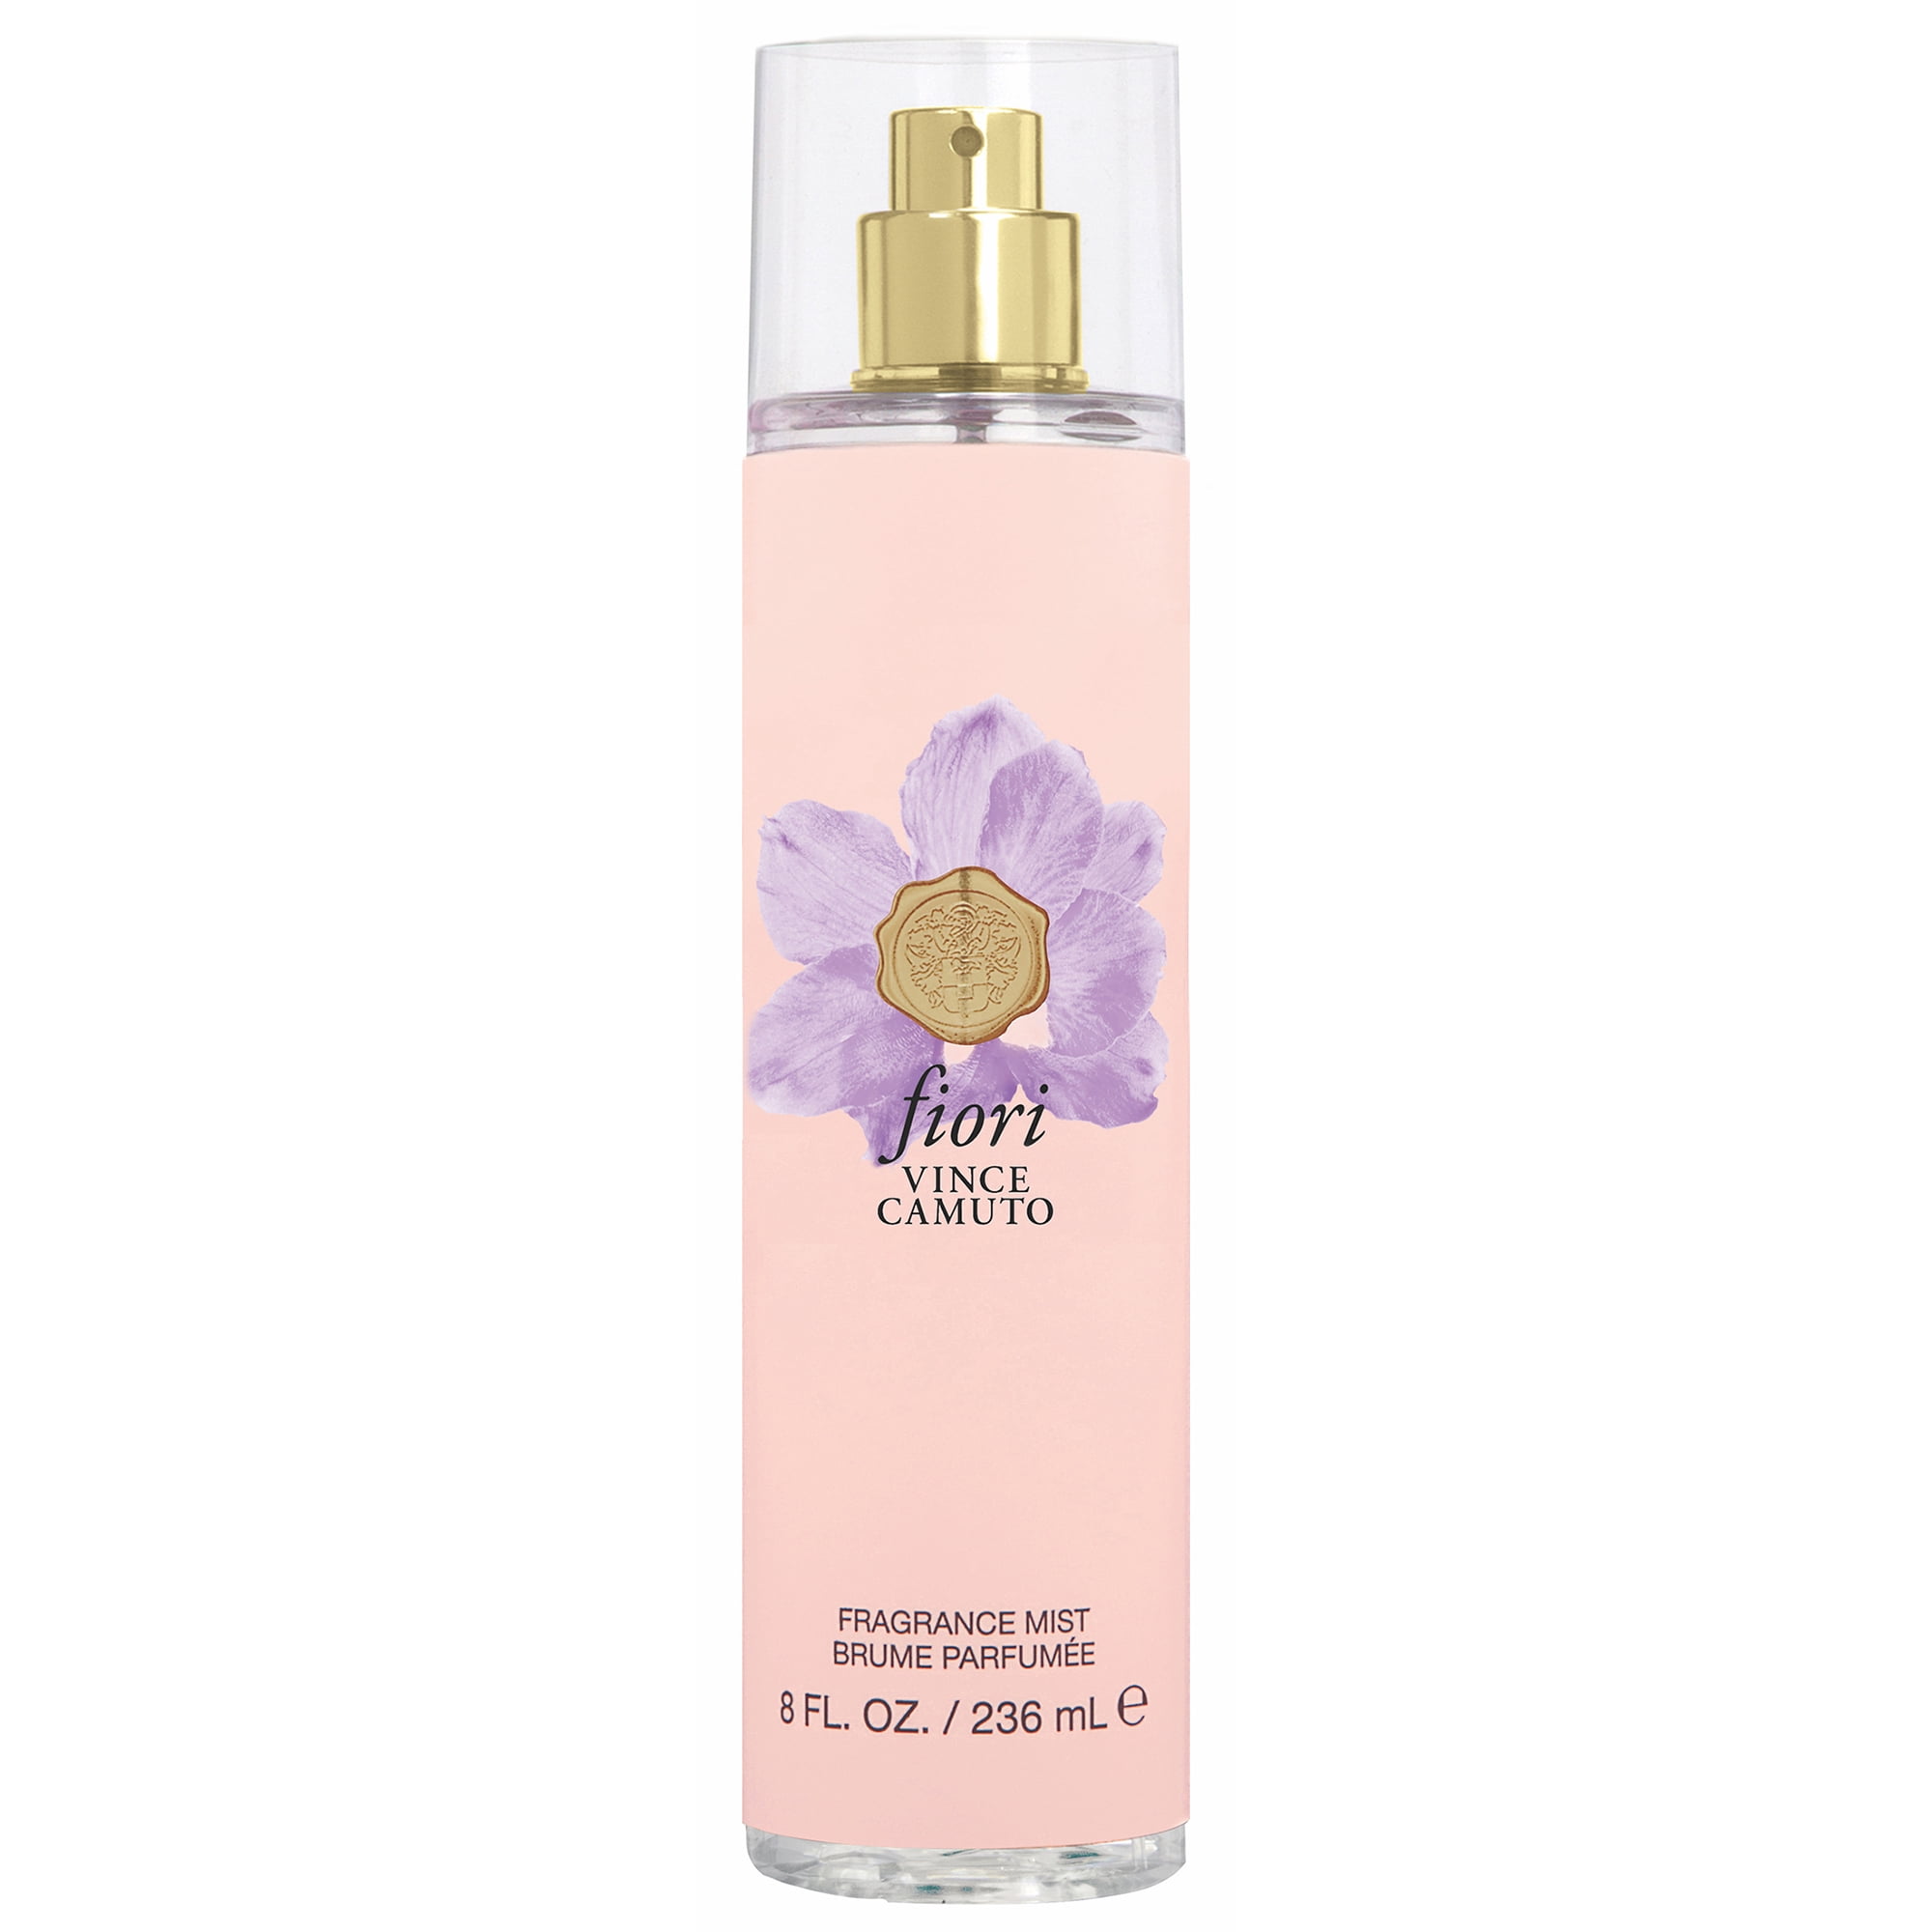 Buy Vince Camuto Fiori Eau de Parfum - 7.5 ml Online In India